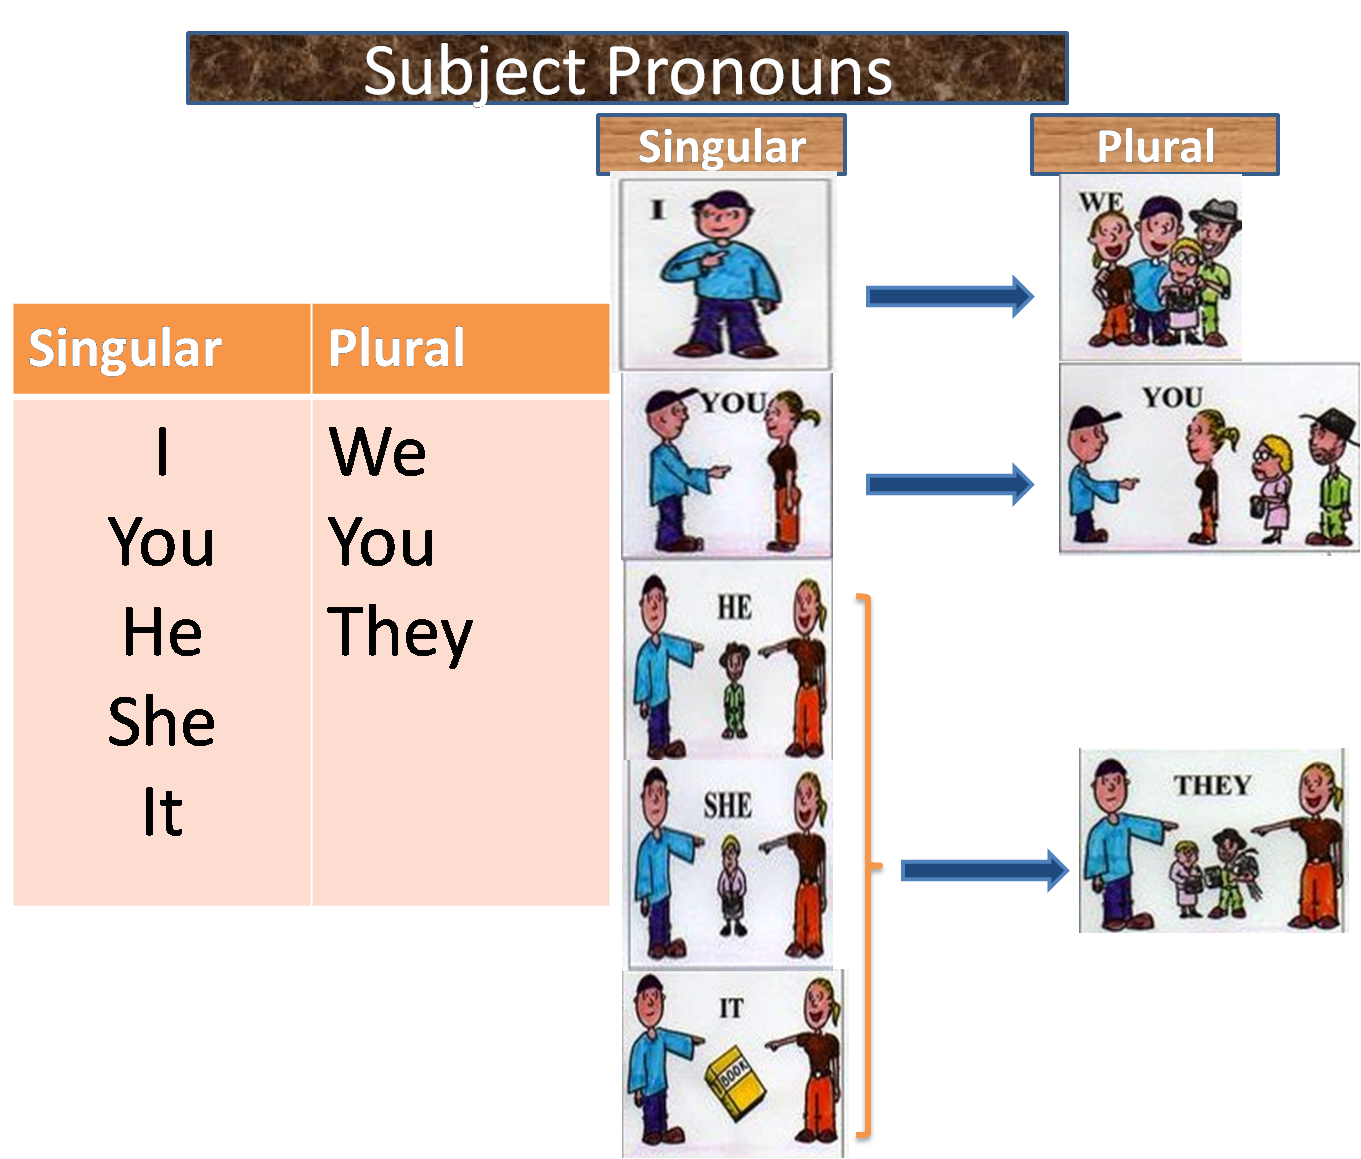 Personal pronouns таблица. Subject pronouns в английском языке. Subject pronouns правило. Упражнения на тему subject pronouns. Subject person